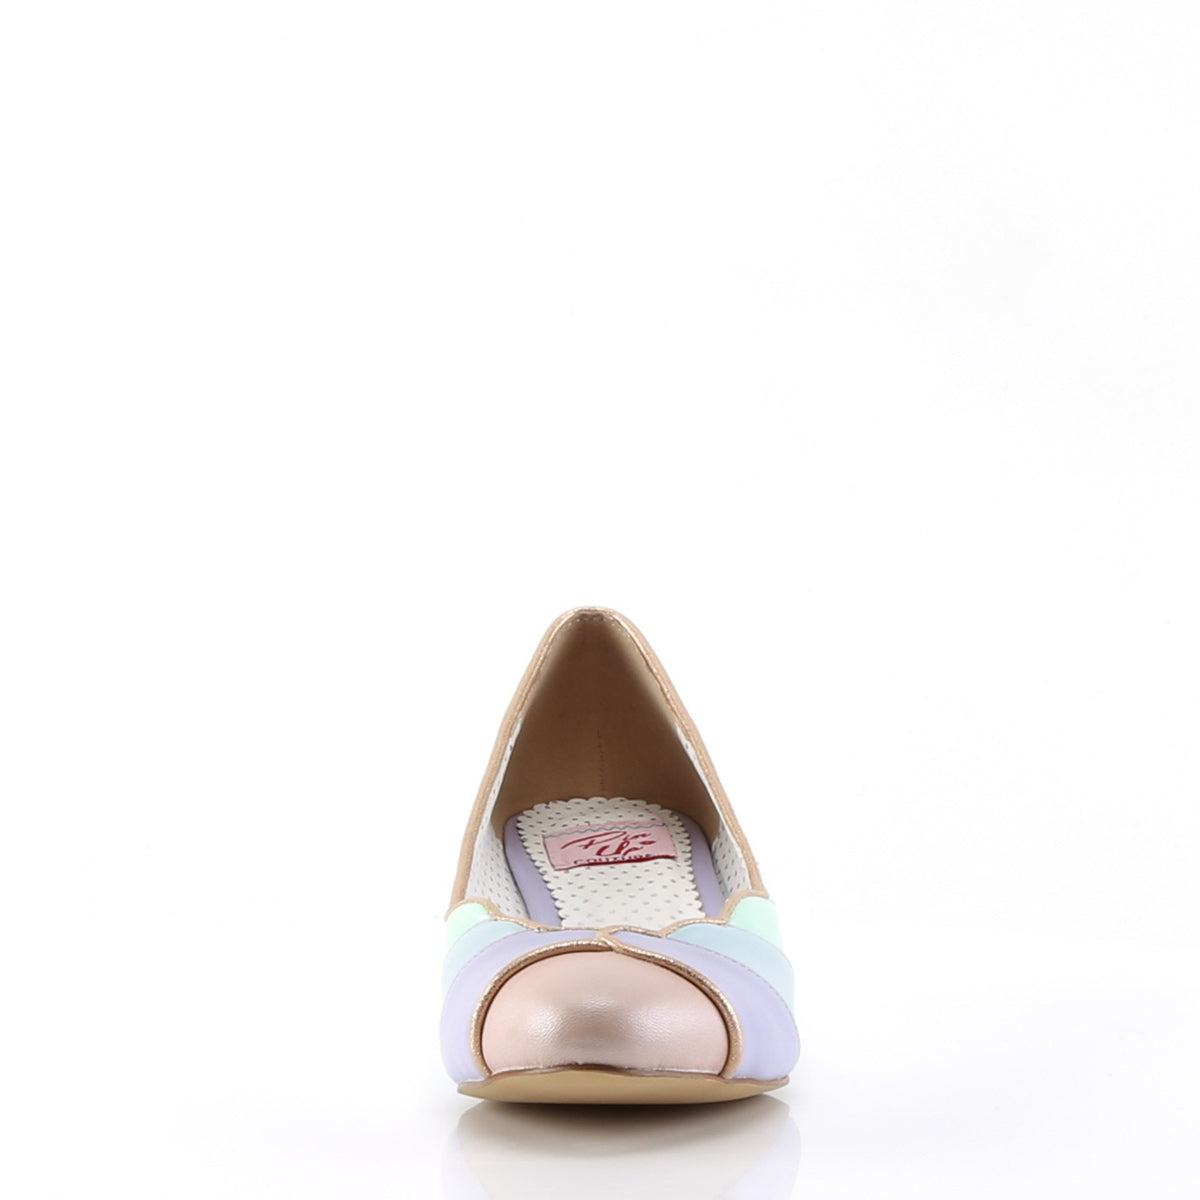 LuLu Multi Colour Kitten Wedge Vintage Inspired Shoes